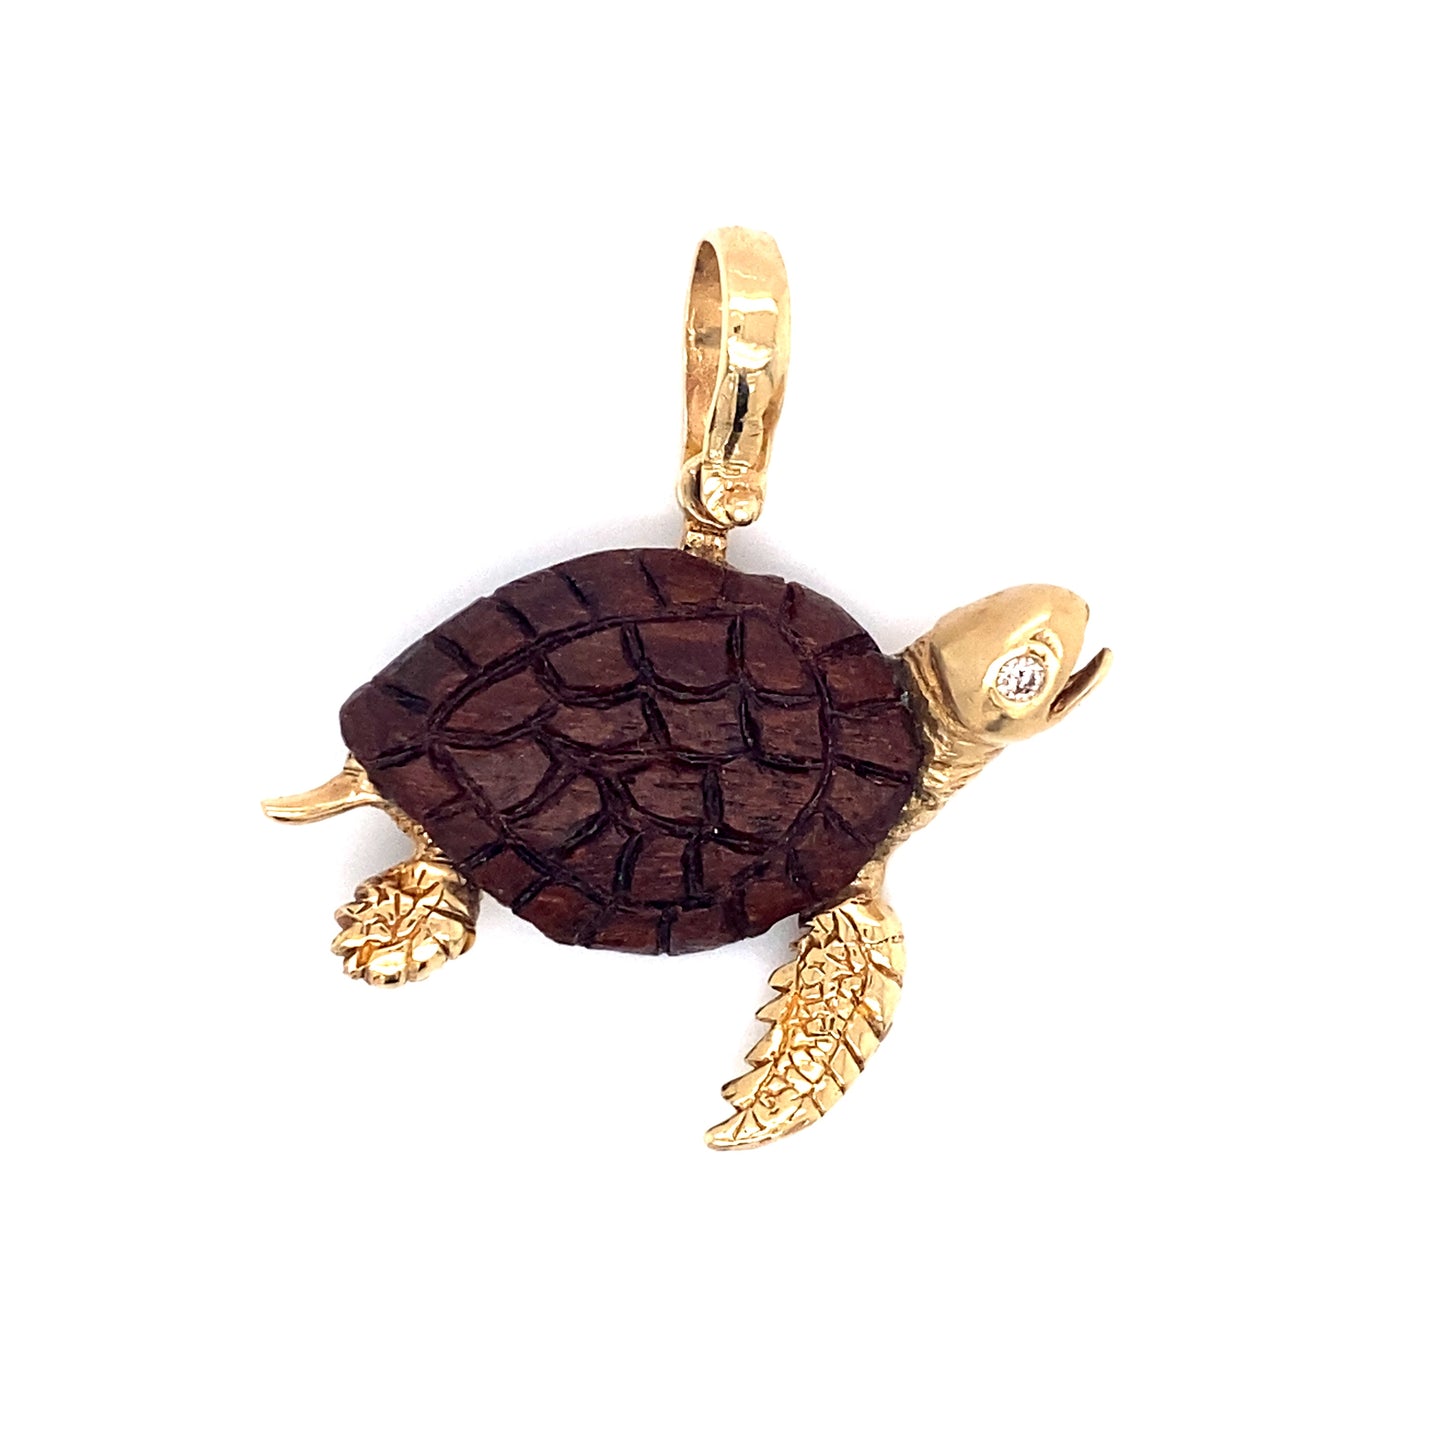 Circa 1990s Reclaimed Wood Sea Turtle Pendant with Diamond Eye in 14K Gold